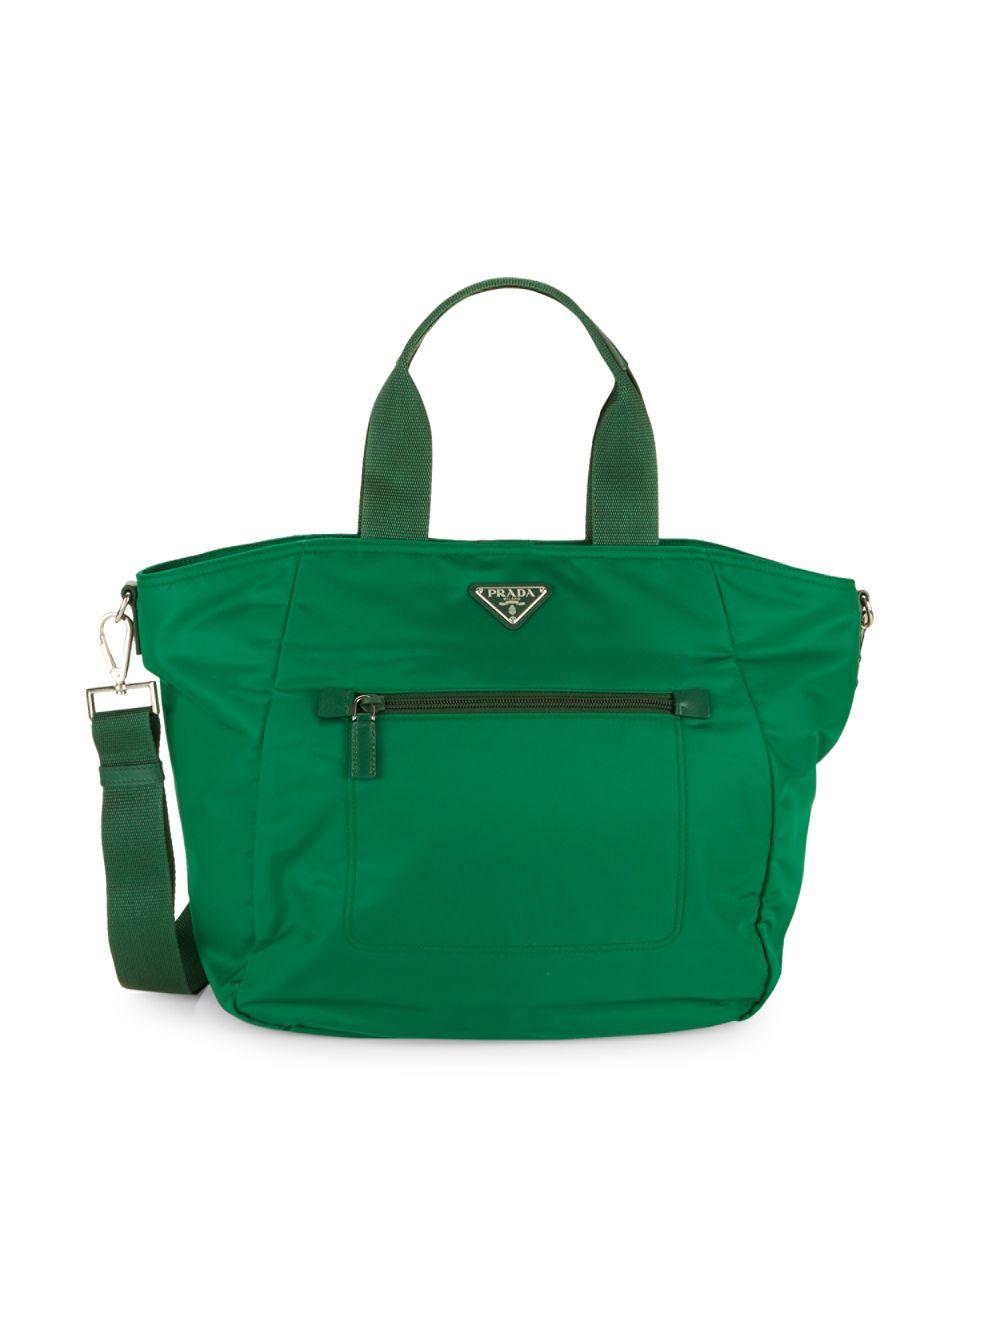 Prada Nylon Two-way Tote Bag in Green | Lyst